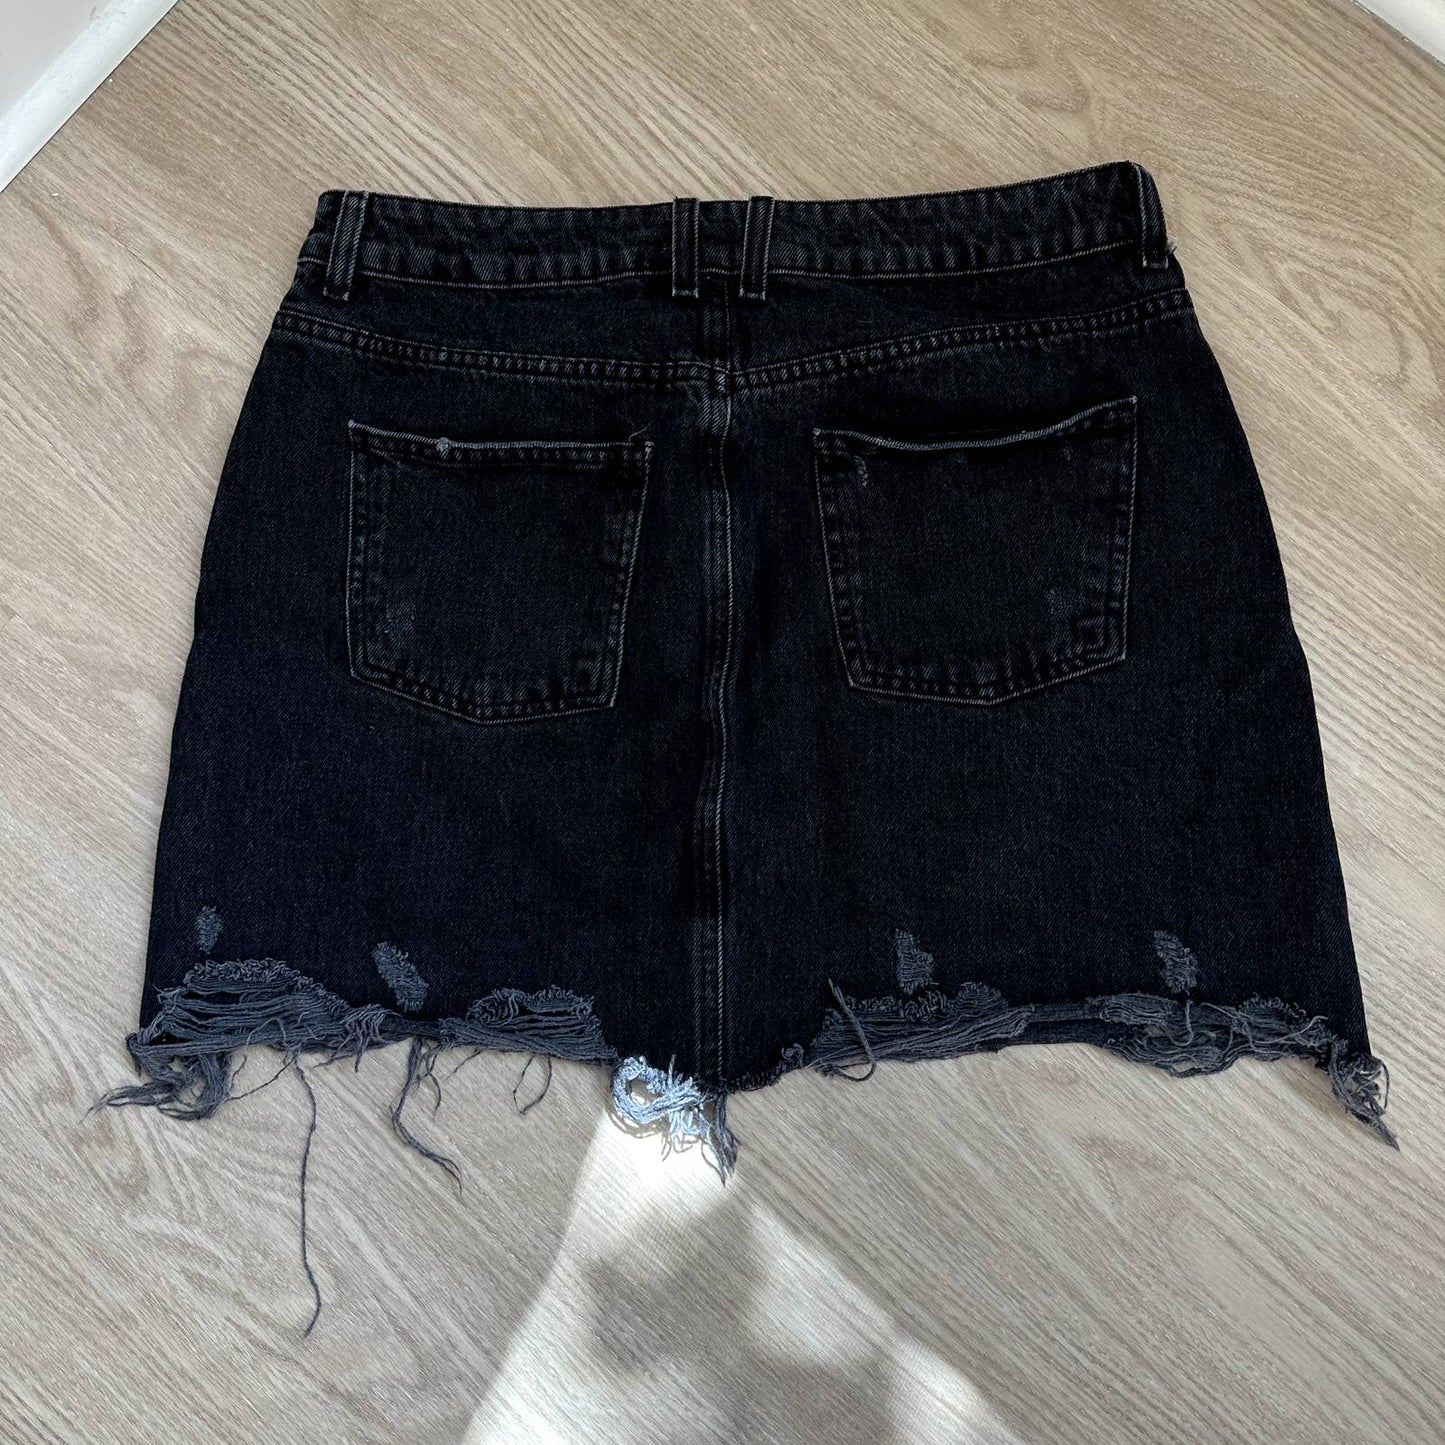 Topshop black distressed ripped high waisted denim jean mini skirt